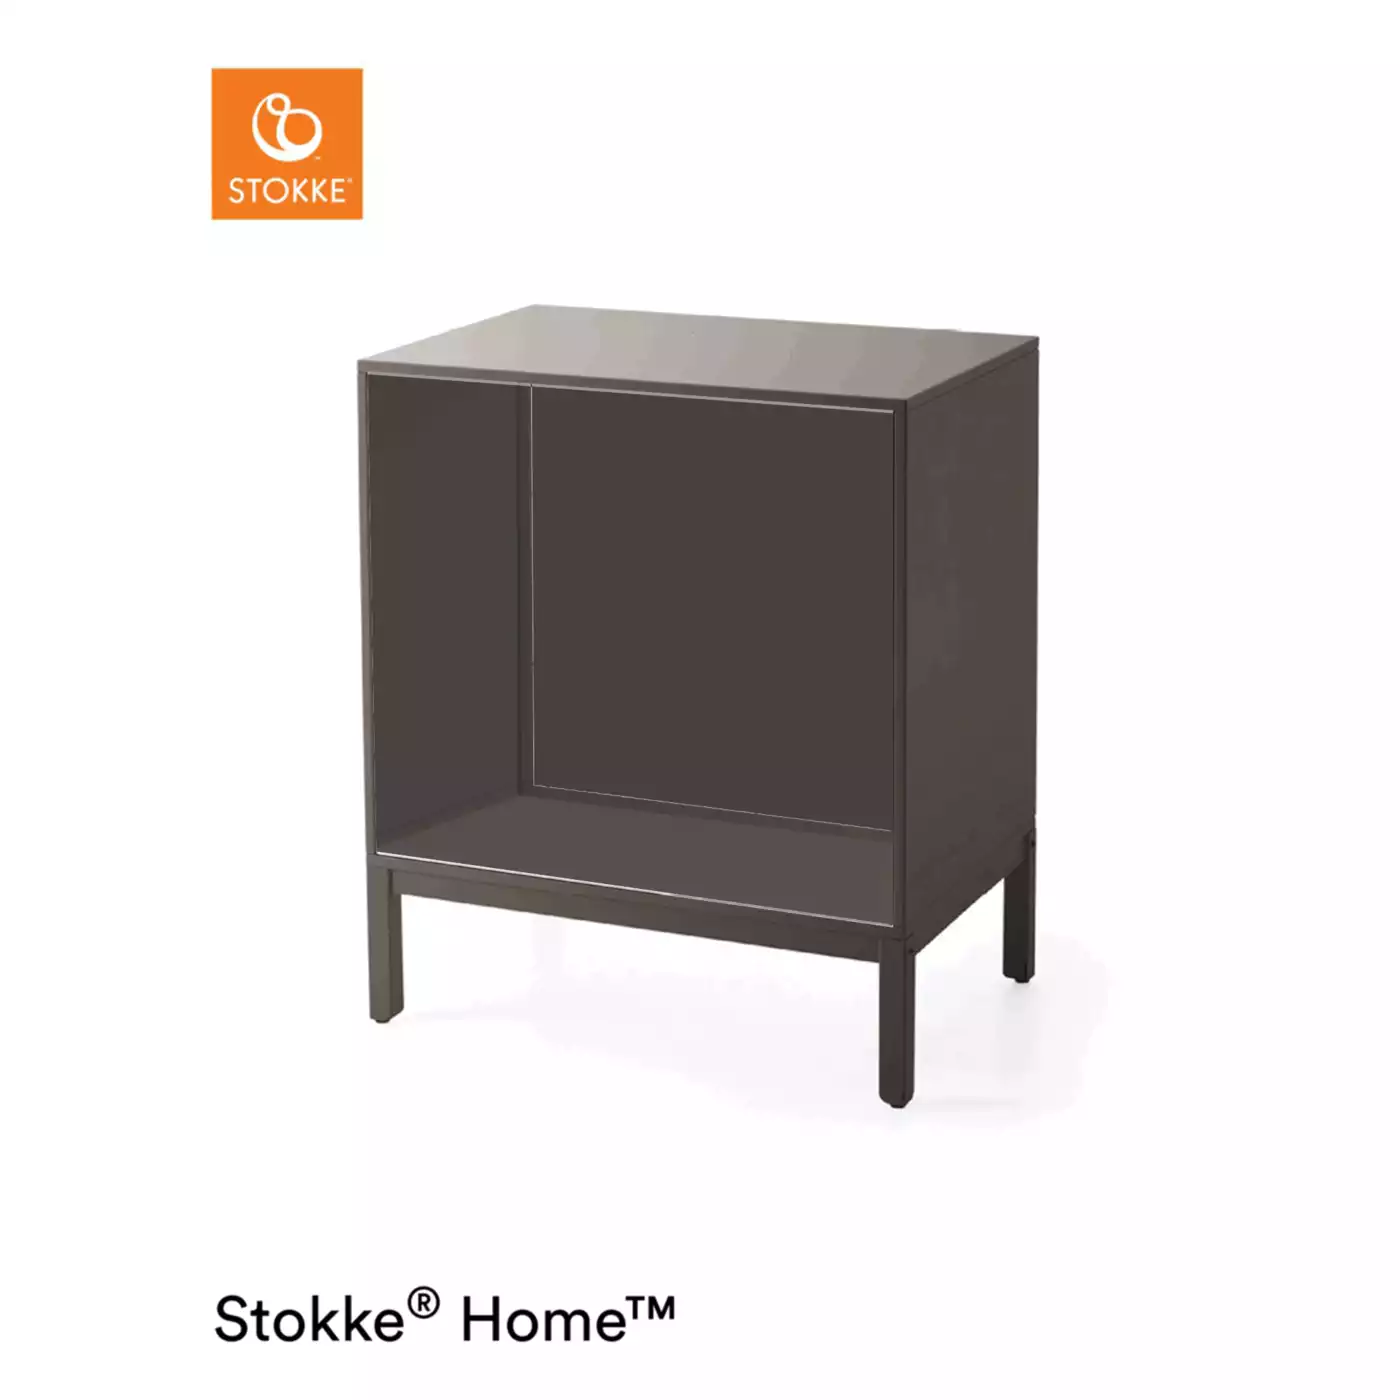 Home™ Dresser Hazy Grey Box 1 STOKKE 2000565854009 3